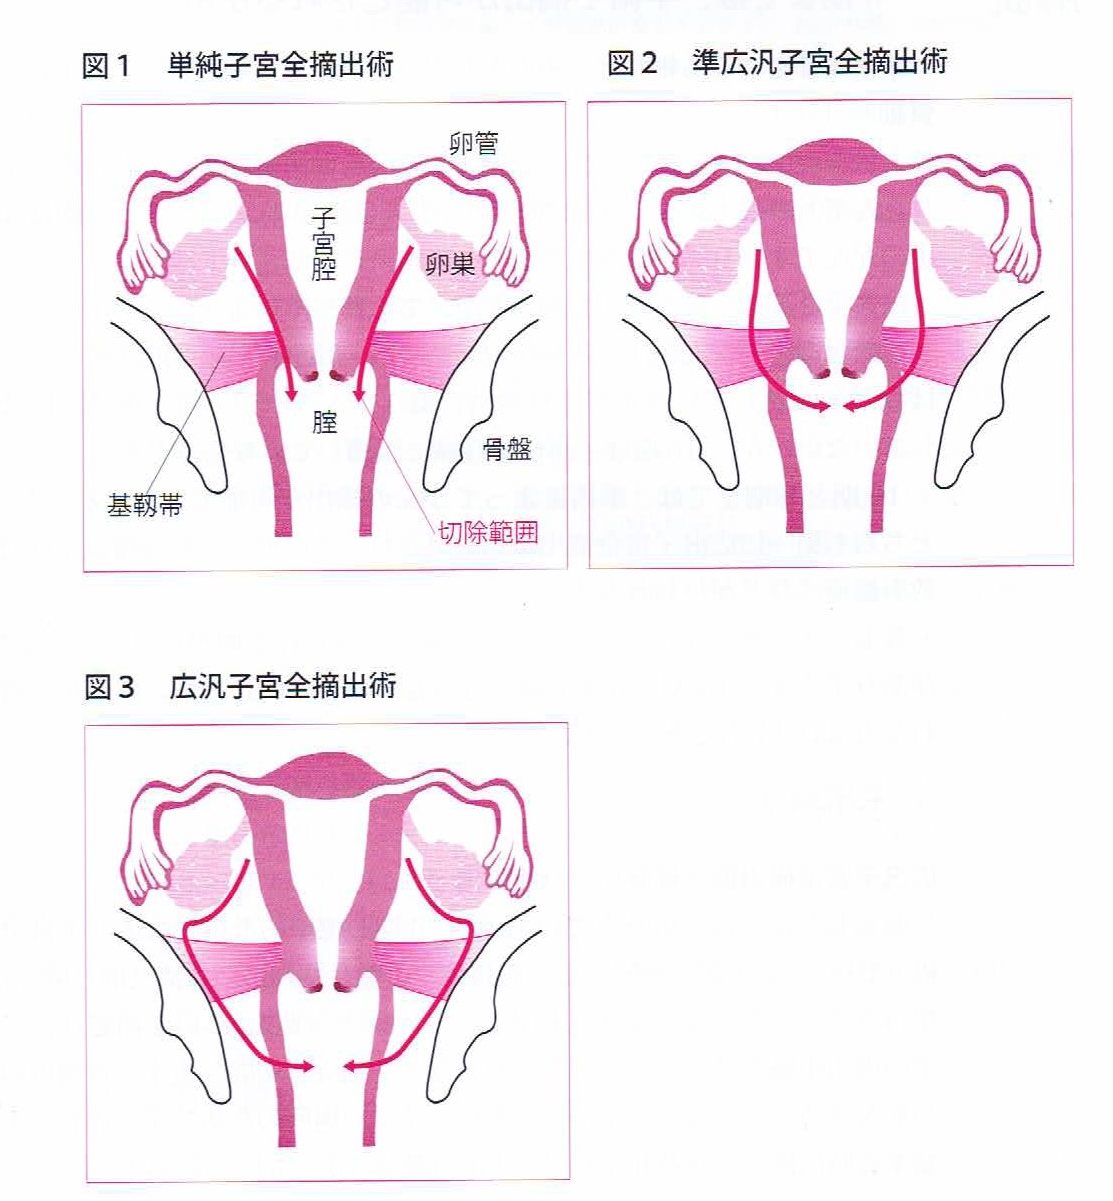 主な子宮悪性腫瘍手術の切除範囲模式図